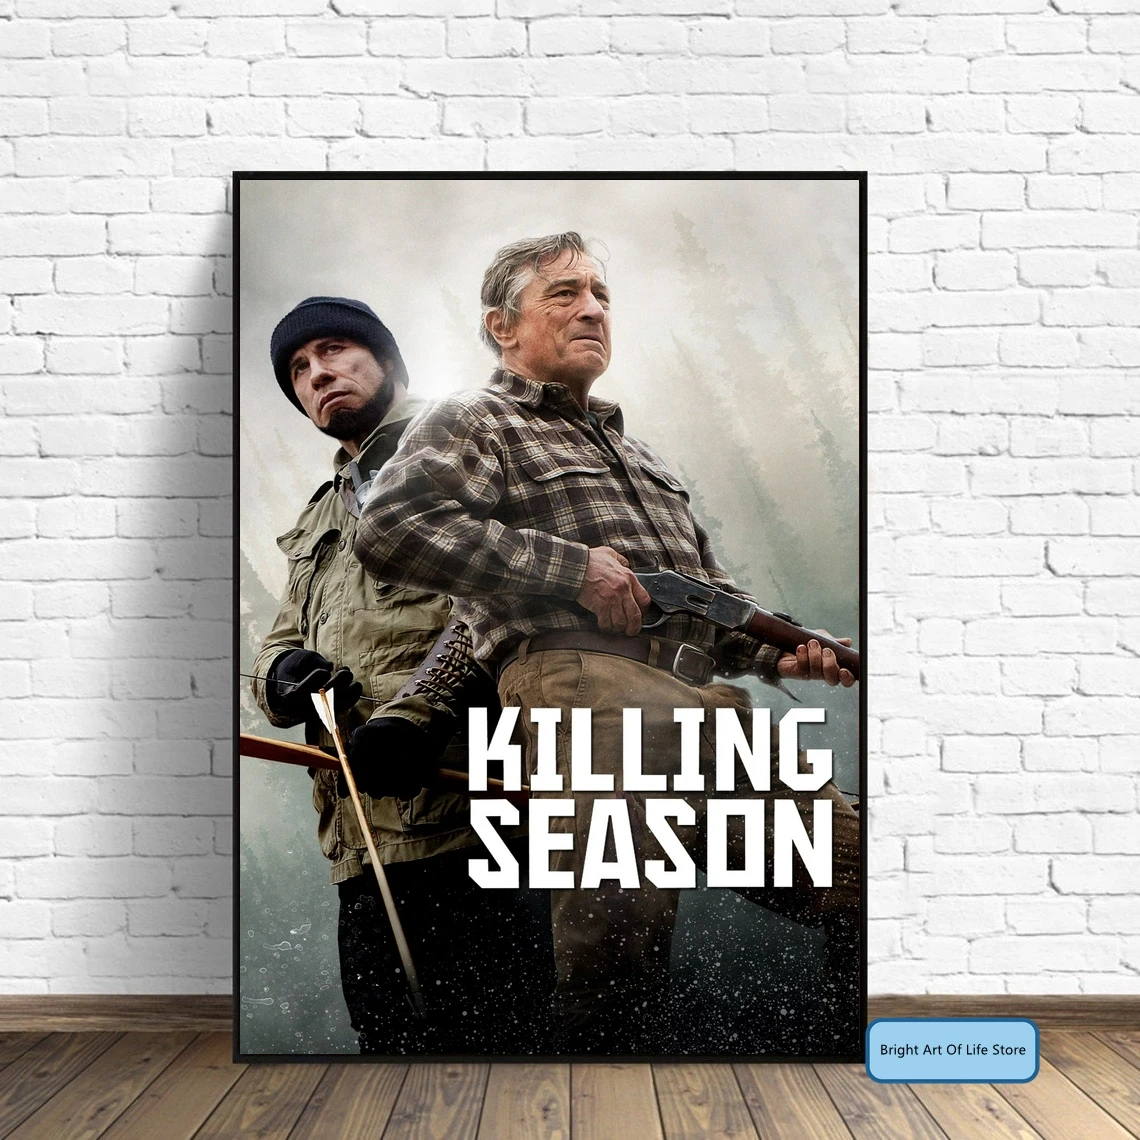 Killing Season (2013) Poster Film Cover Photo Print Canvas Wall Art Decor Acasă (Fara Rama)3